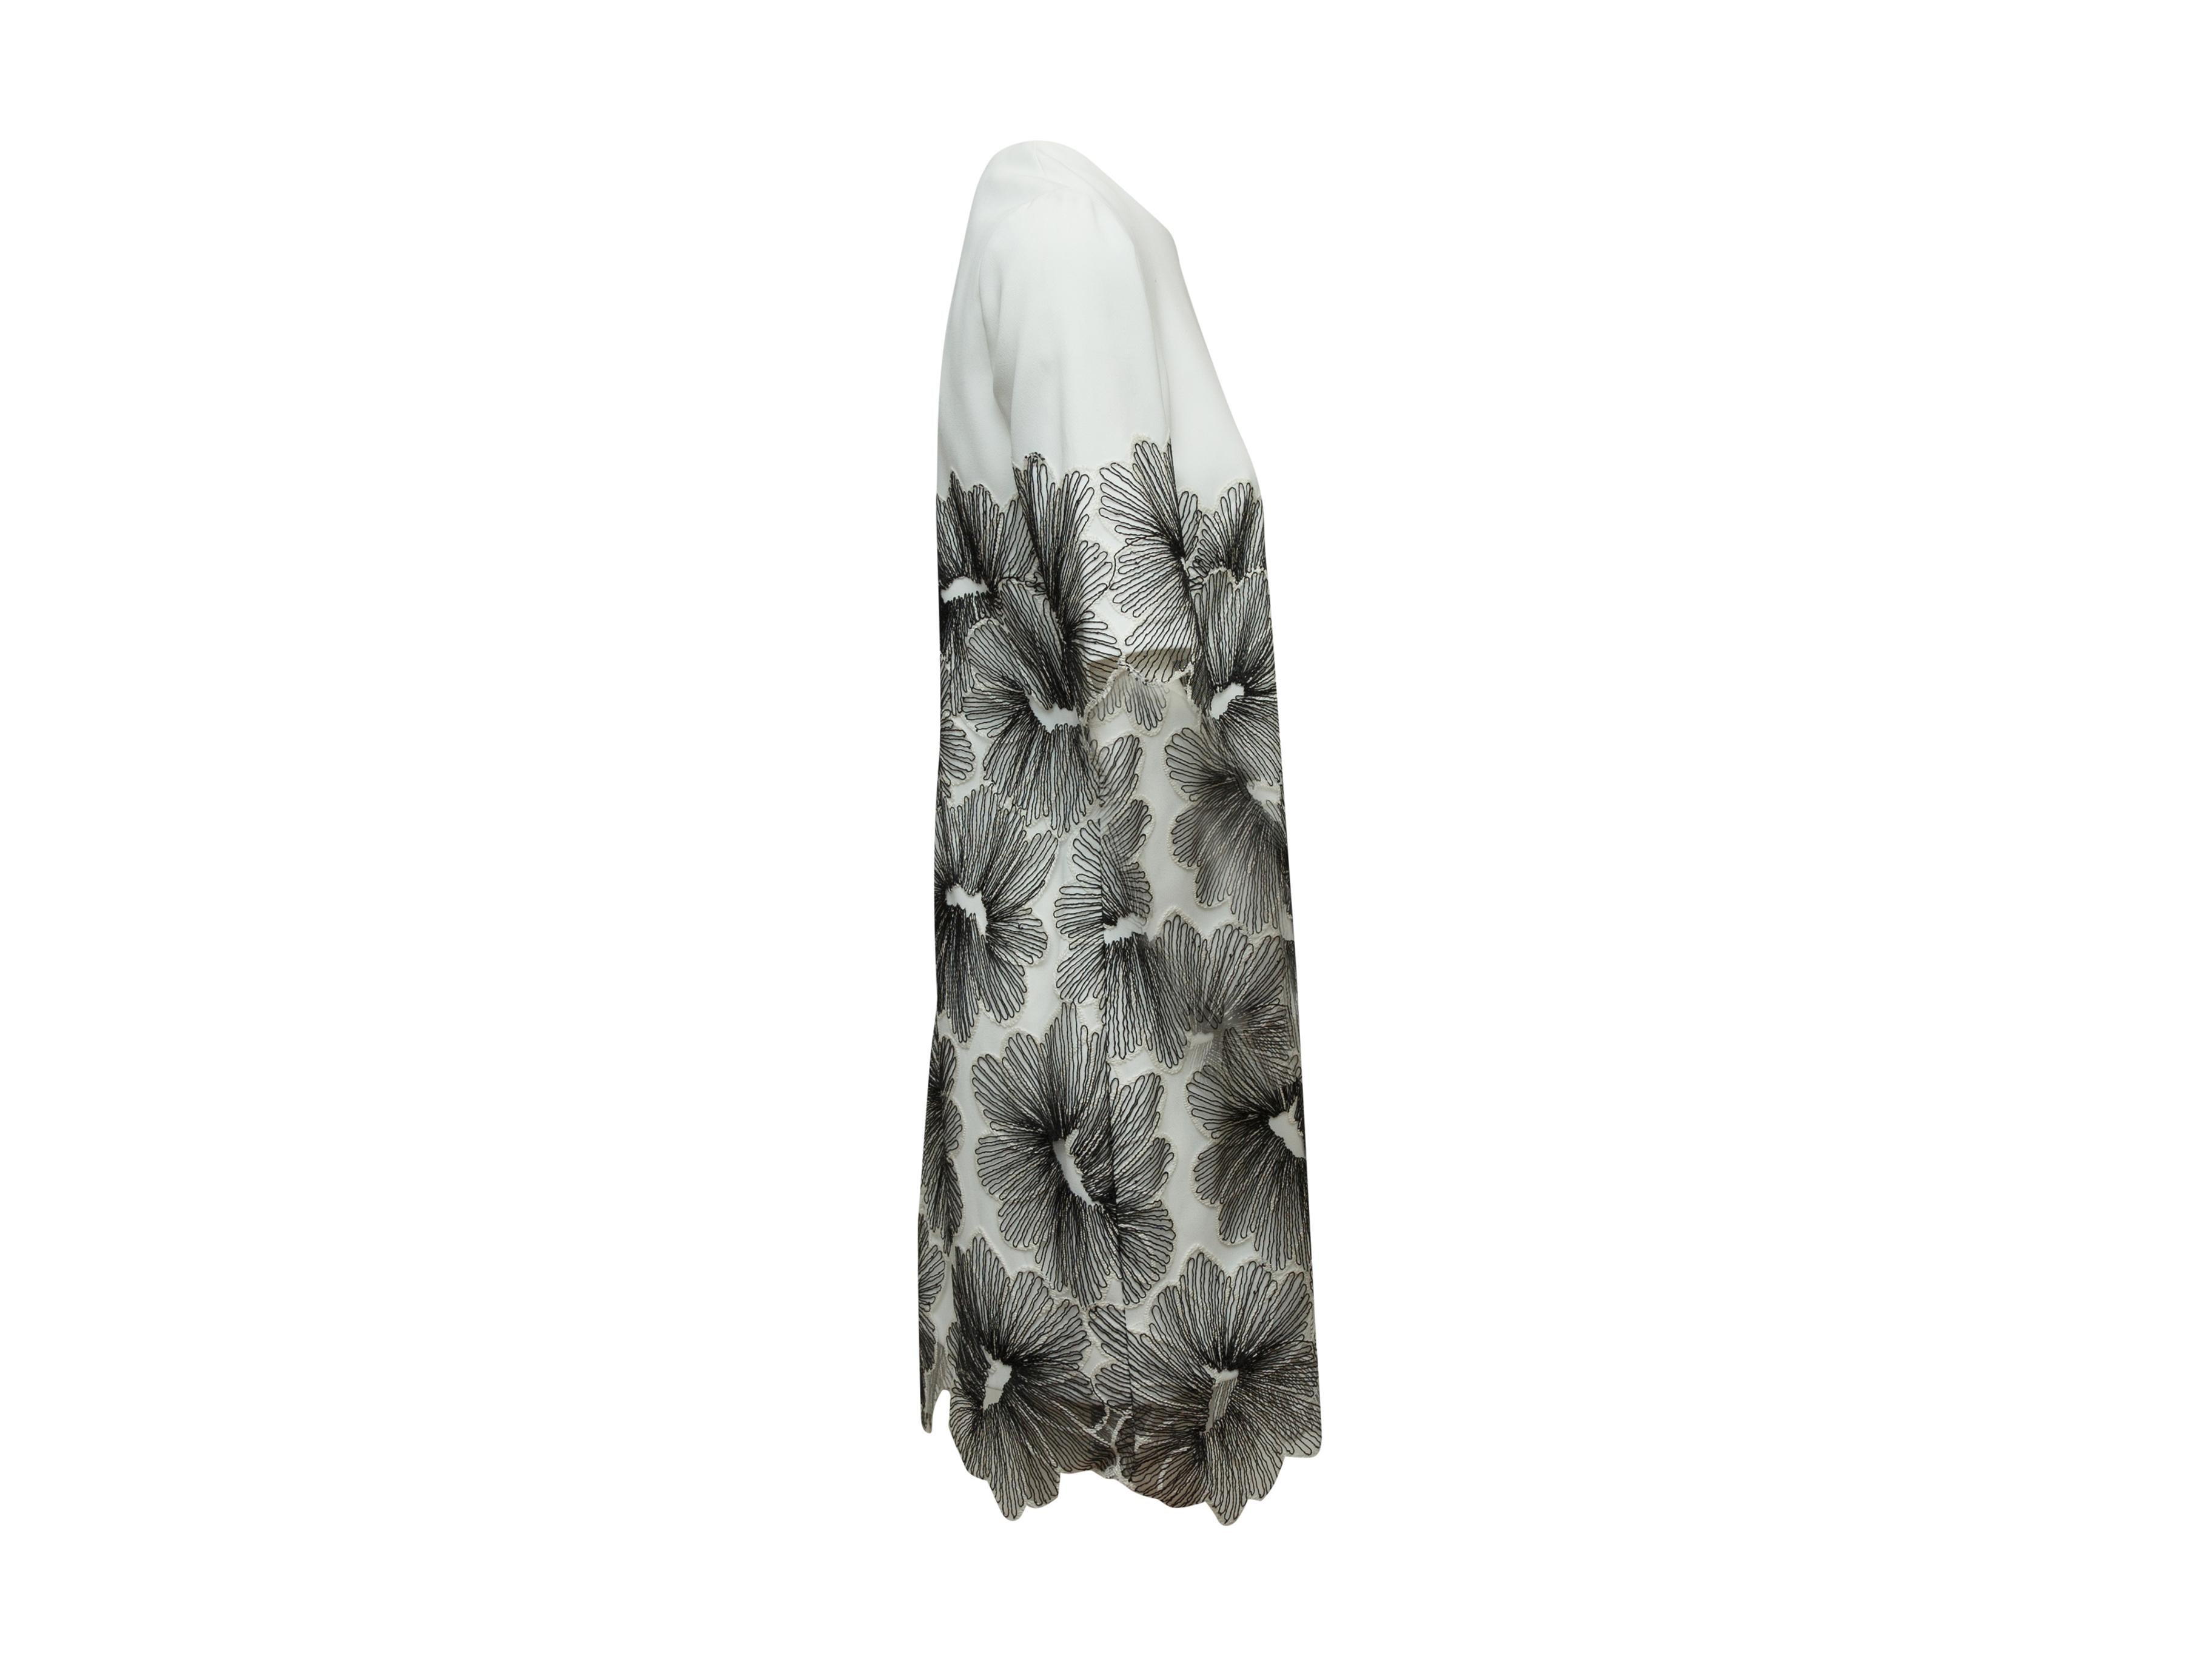 Product details: White short sleeve dress by Lela Rose. Black floral patterned overlay. Zip closure at back. 36